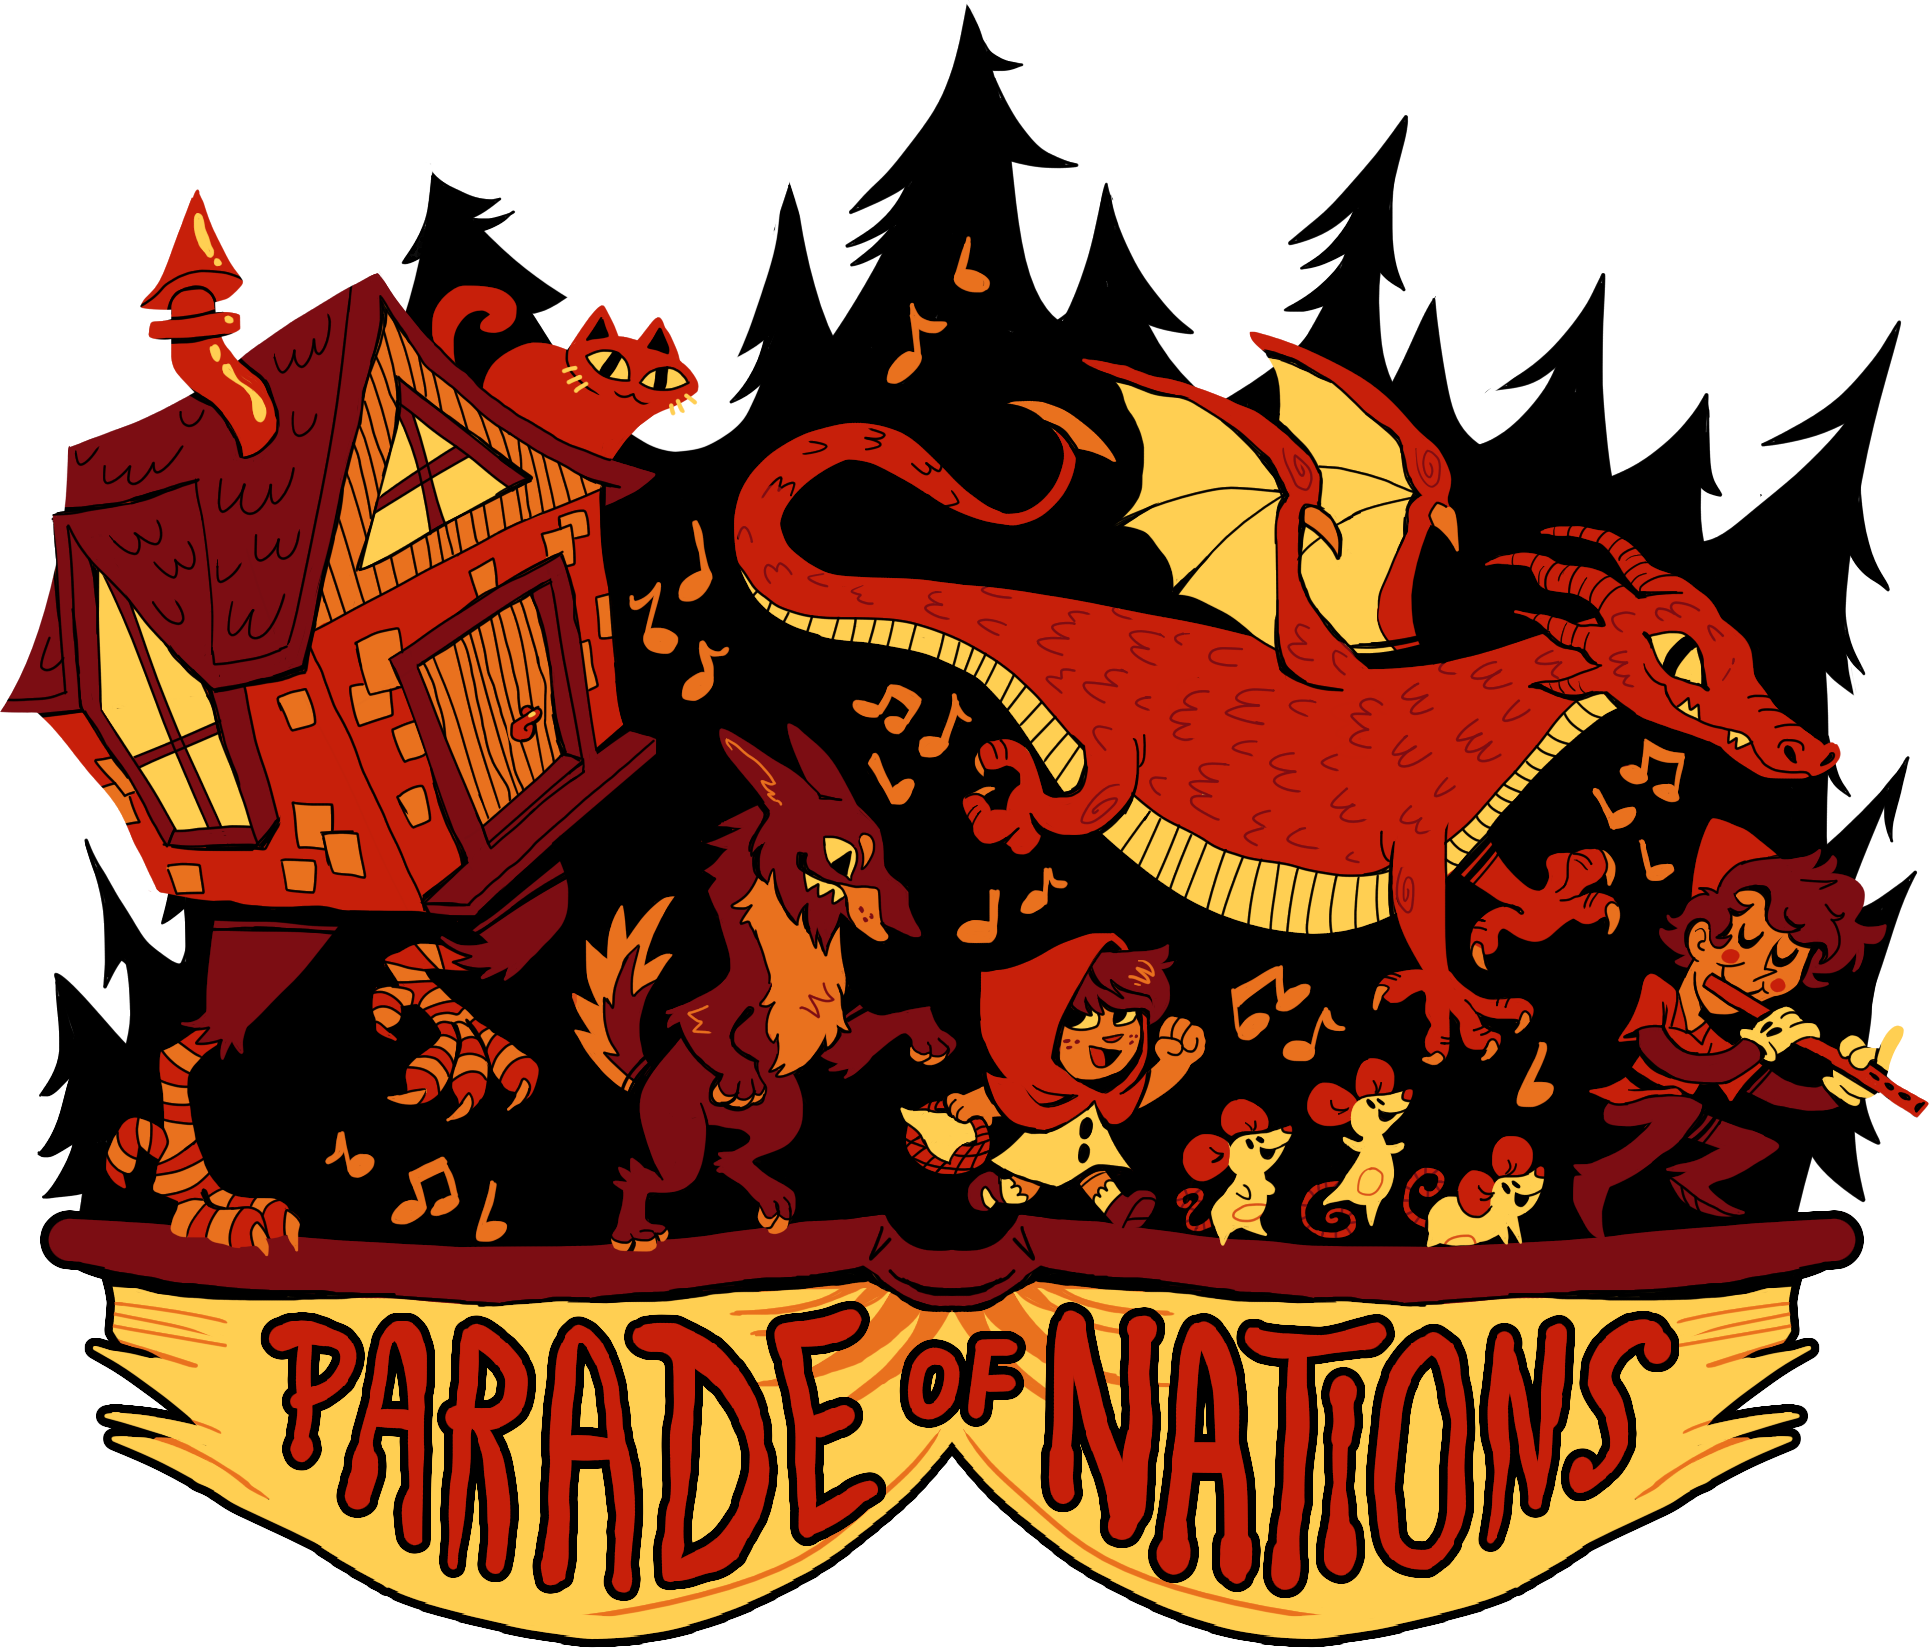 Parade of Nations logo.